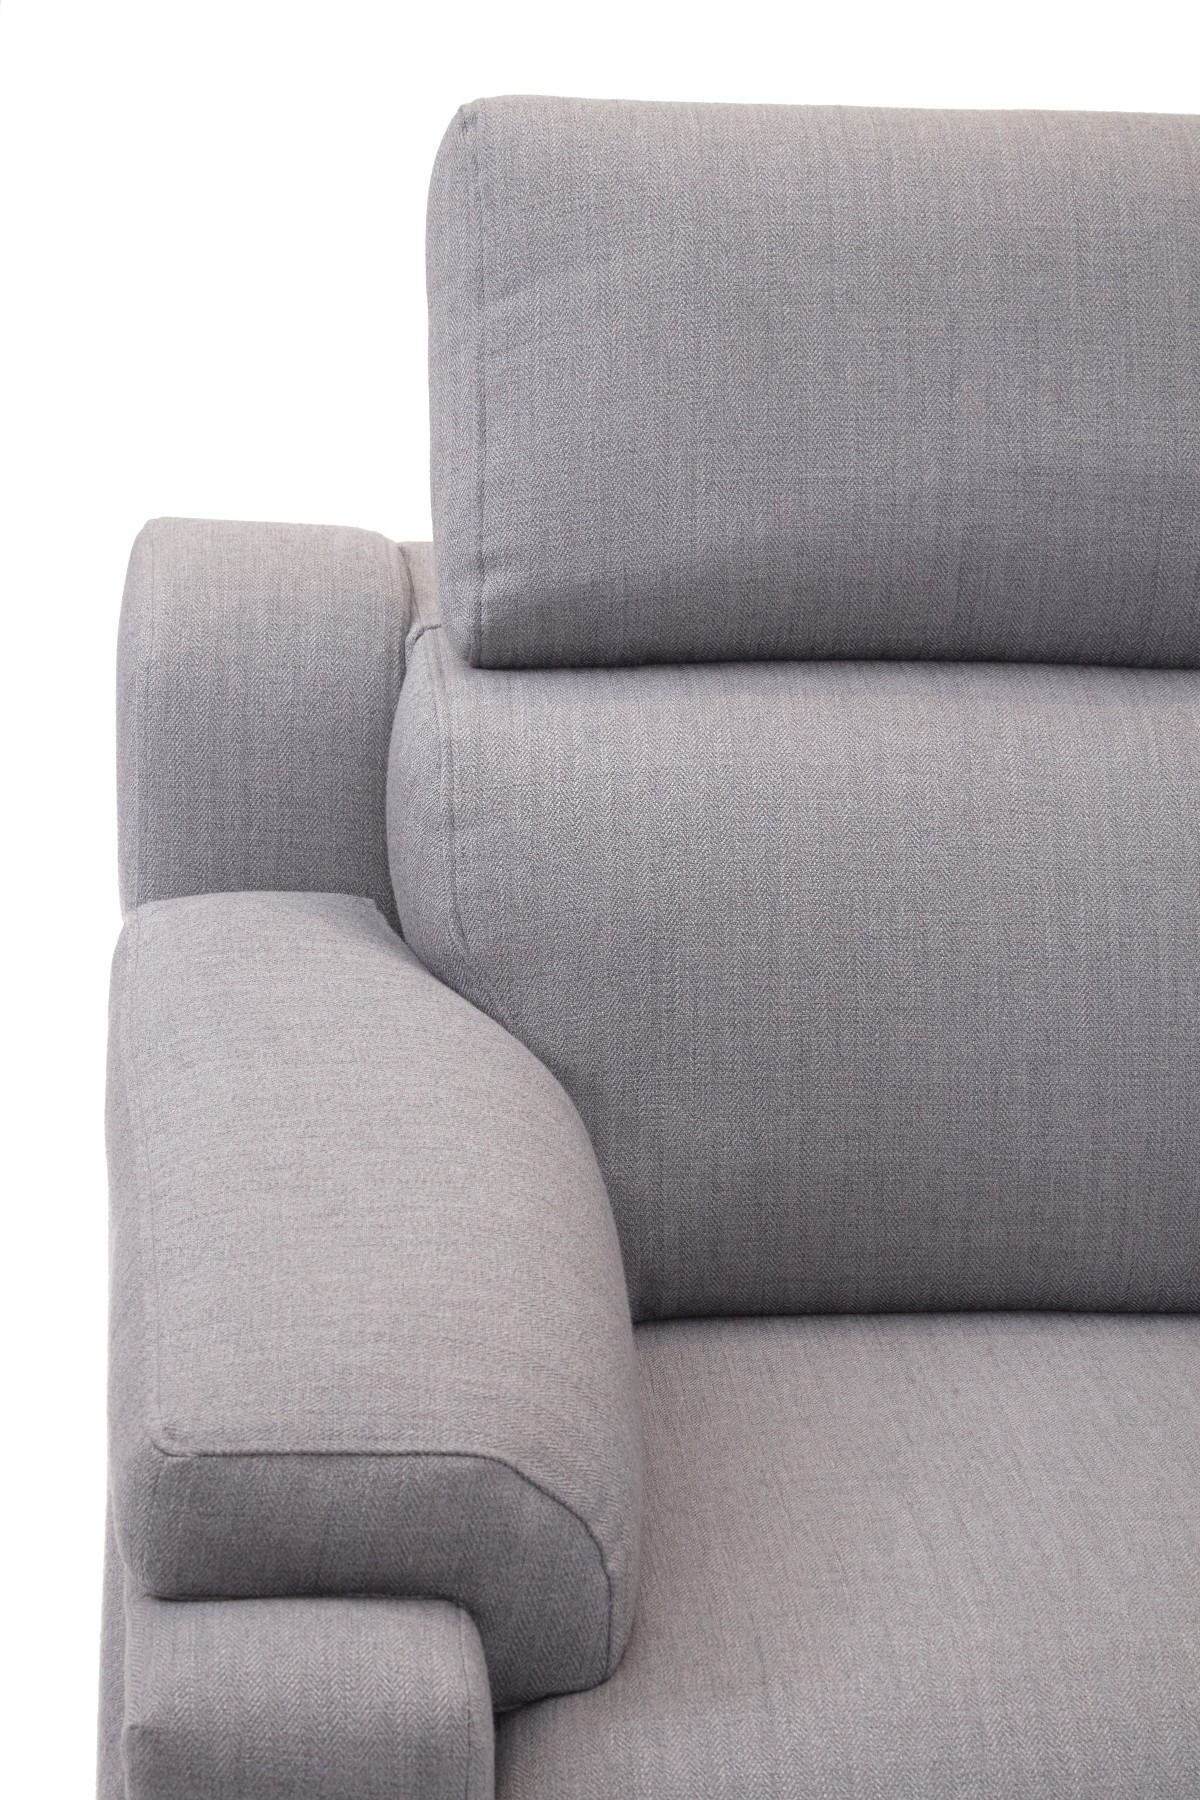 Parker Knoll Design 1701 Armchair